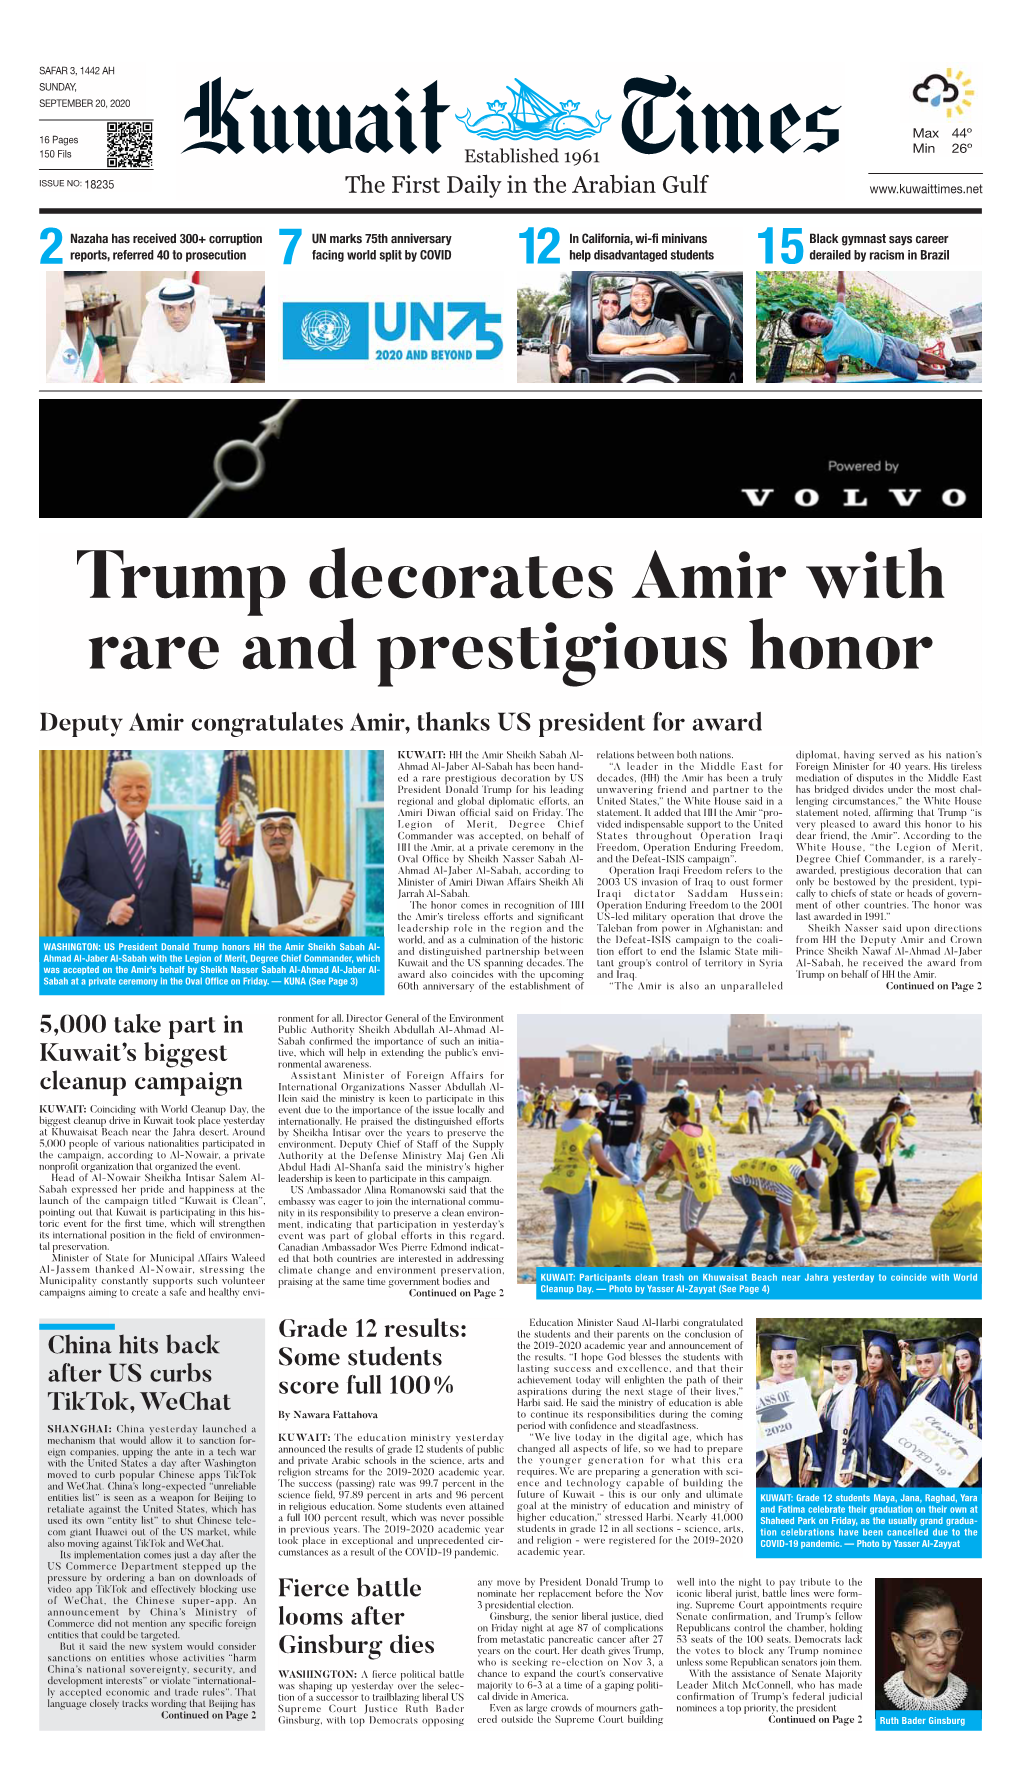 Trump Decorates Amir with Rare and Prestigious Honor